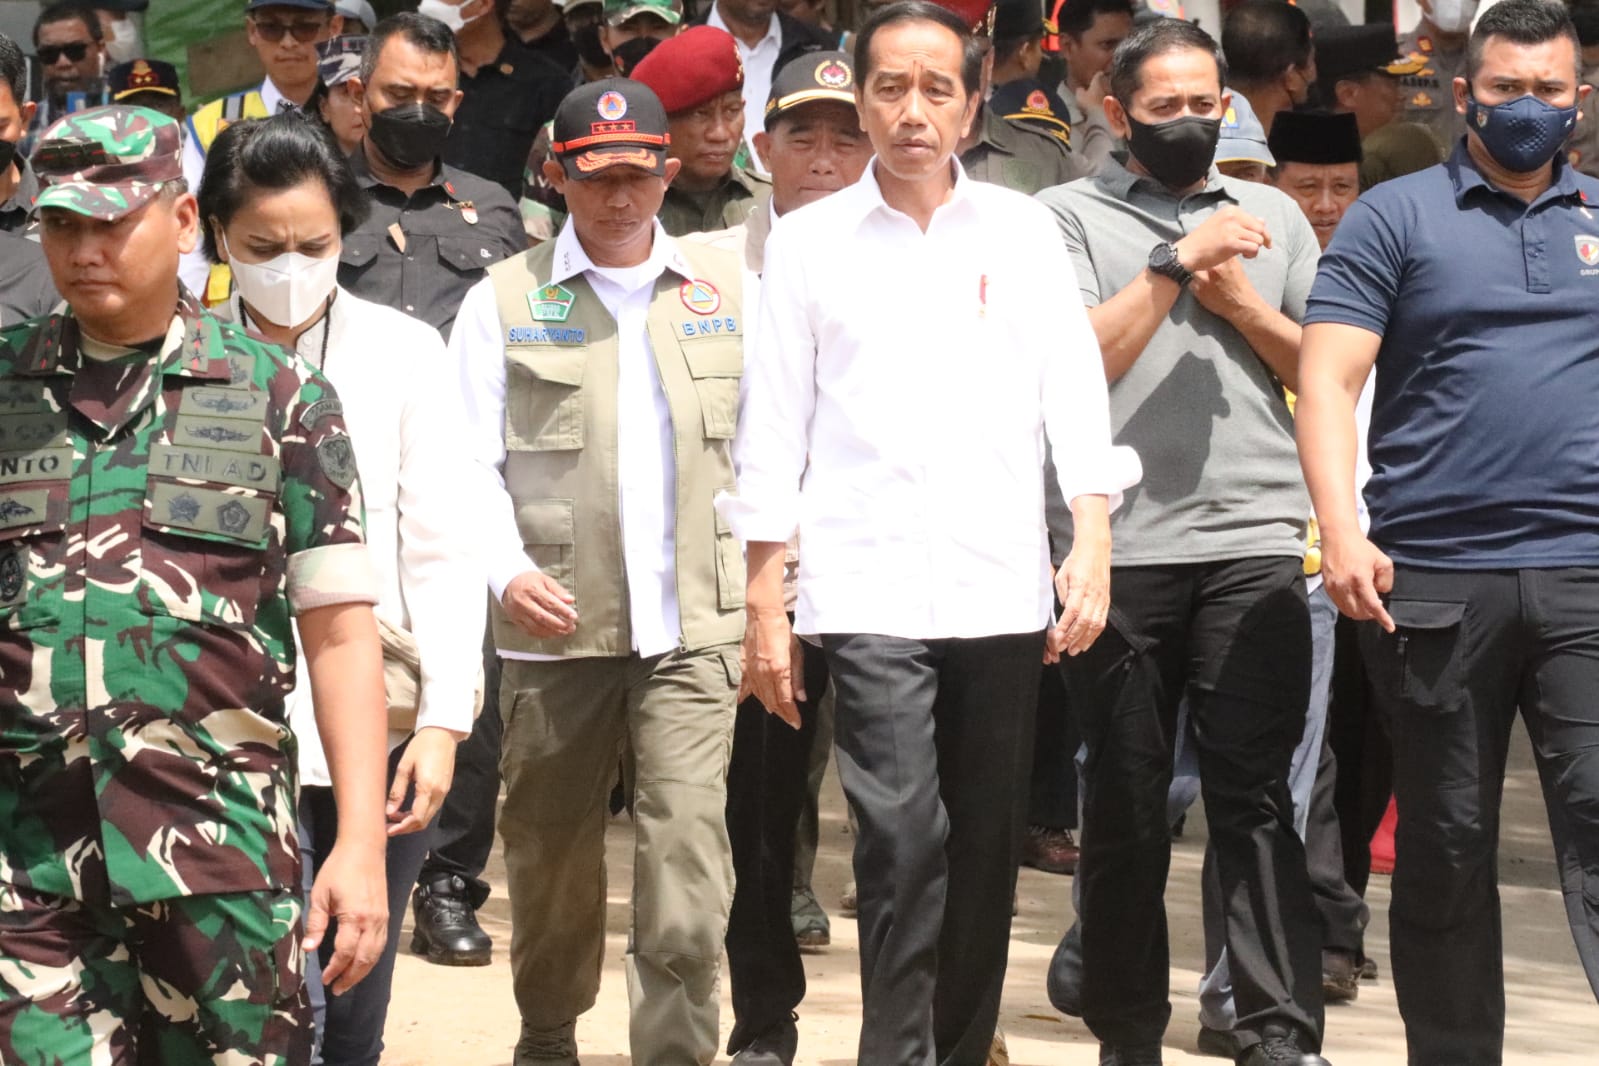 Kepala BNPB Letjen TNI Suharyanto (kemeja putih dengam rompi) saat mendampingi Presiden Joko Widodo (kemeja putih) melakukan peninjauan ke lokasi terdampak di Desa Cijendil, Kabupaten Cianjur, Jawa Barat pada Kamis (24/11).